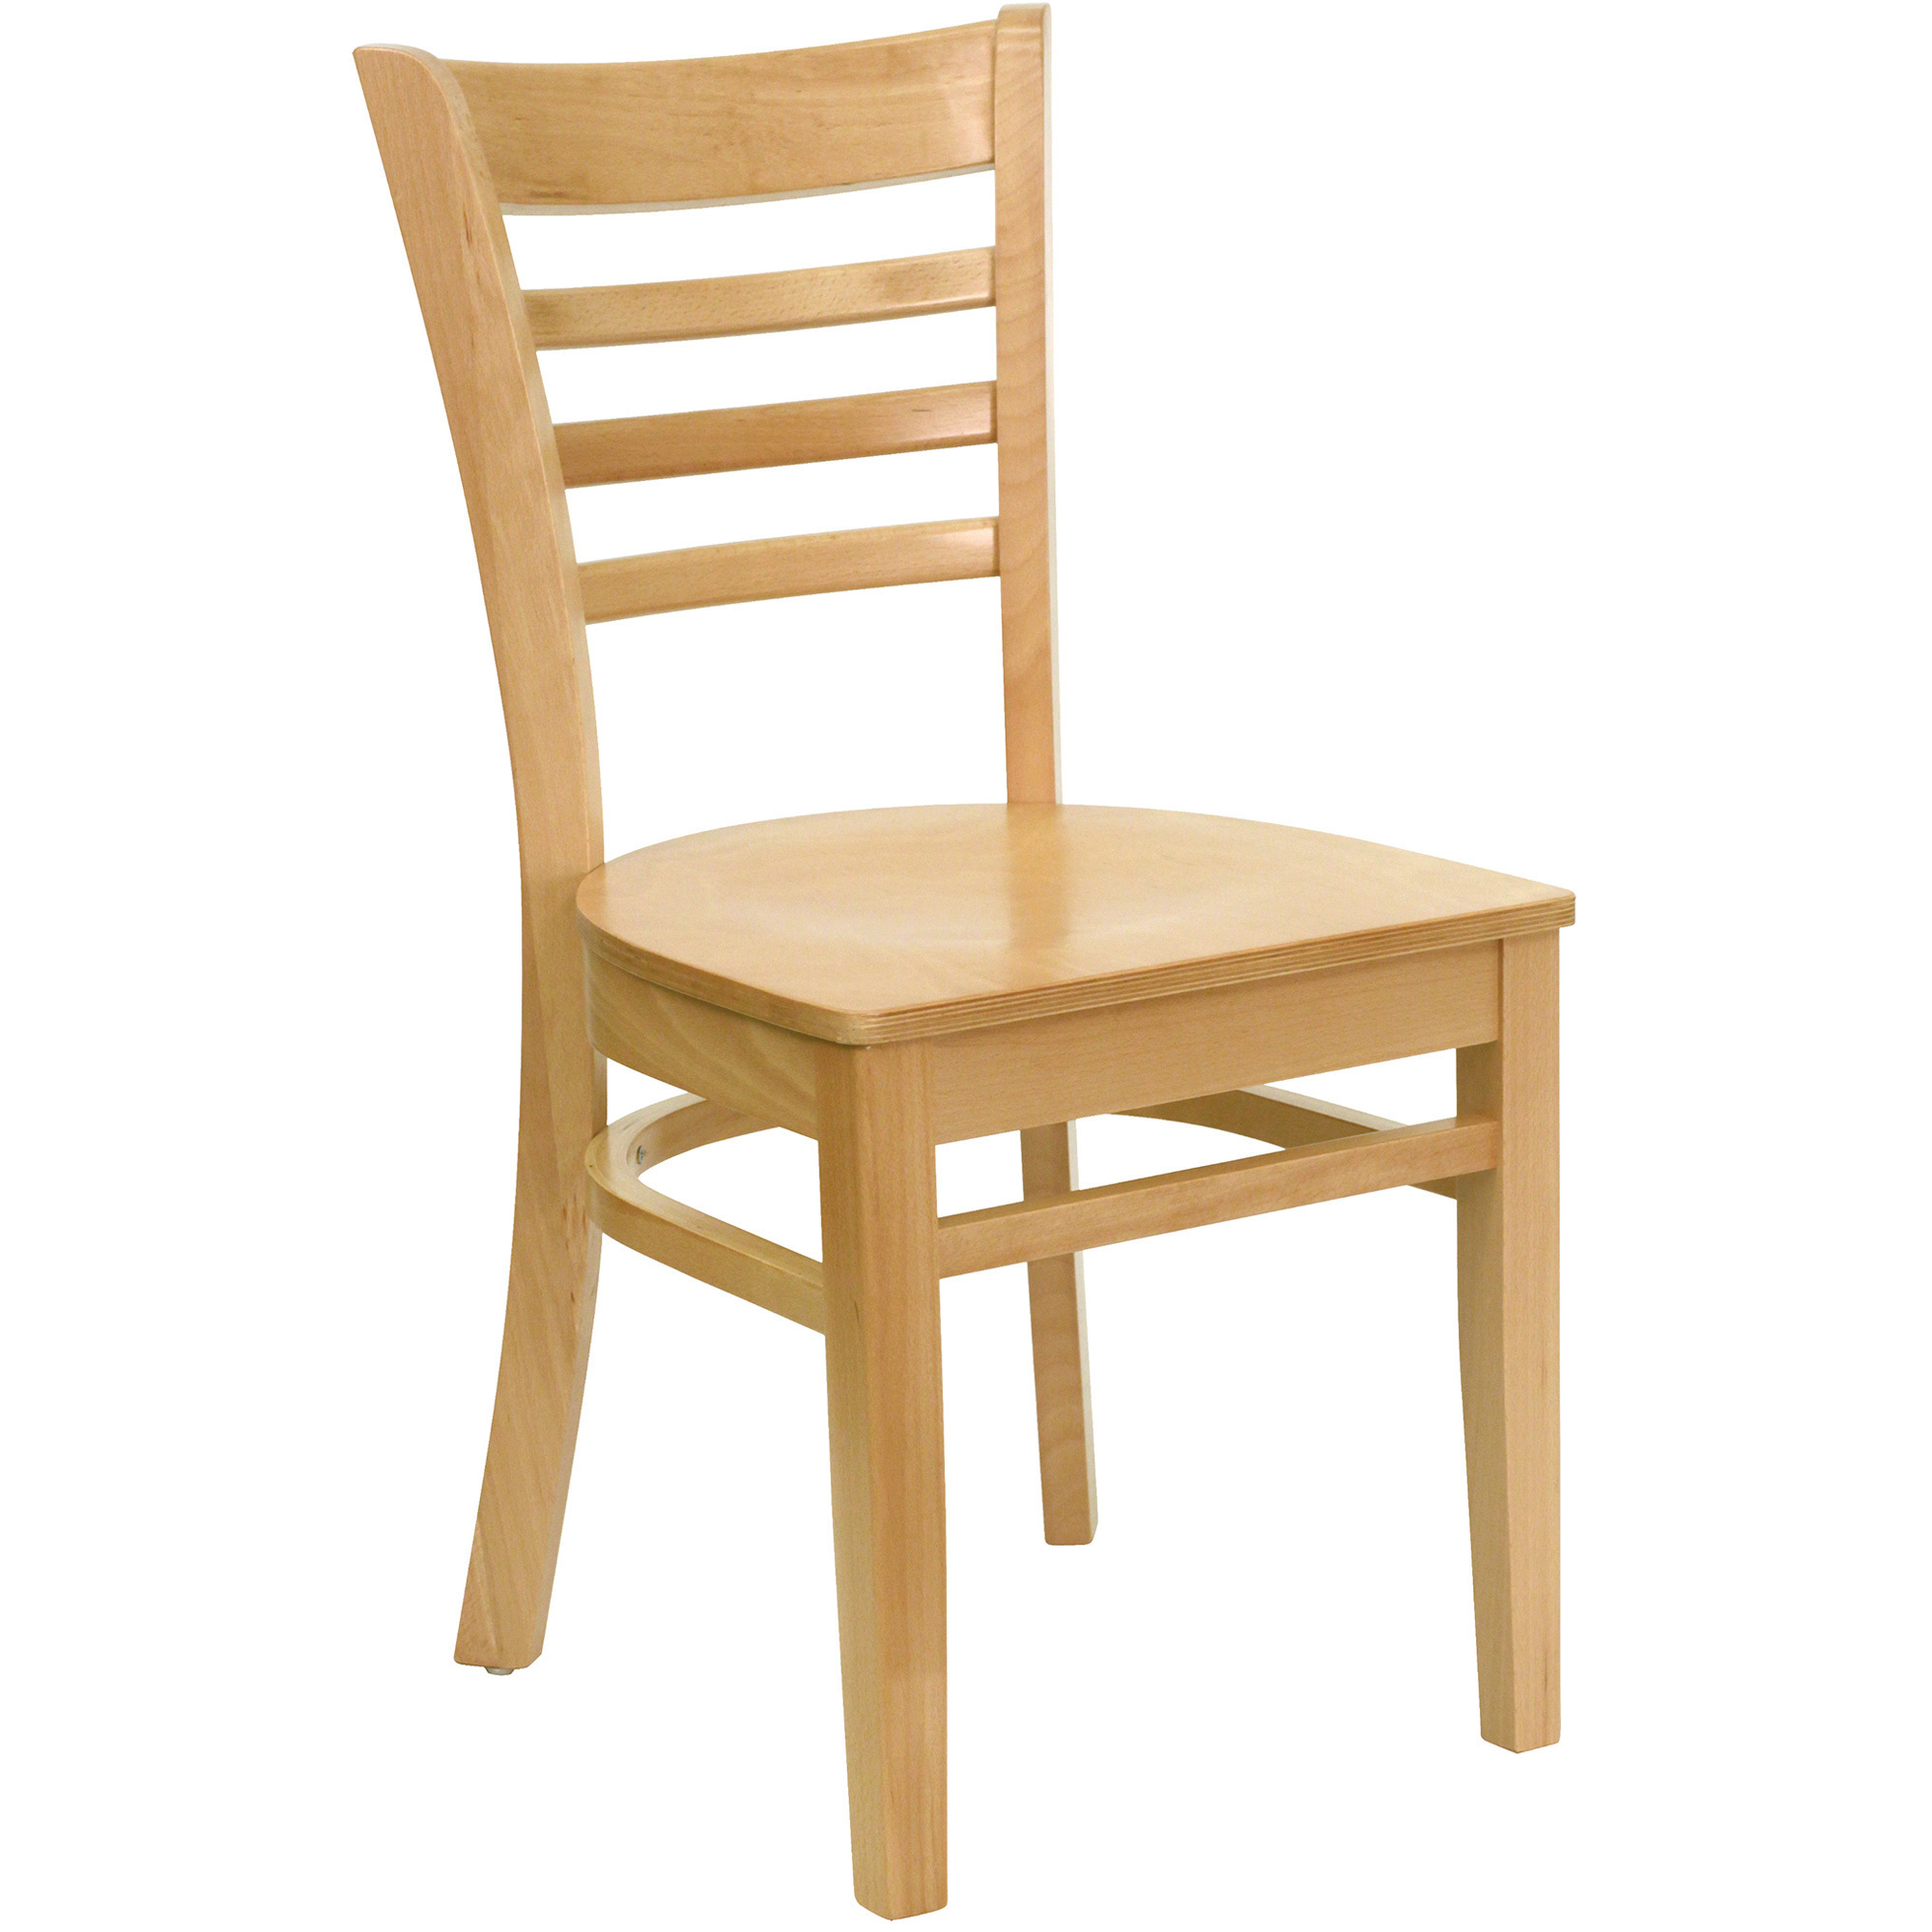 Flash Furniture Wood Dining Chair â Natural Finish, 800-Lb. Capacity, 17 1/4Inch W x 20Inch D x 33 3/4Inch H, Model XUDGW0005LADNAT